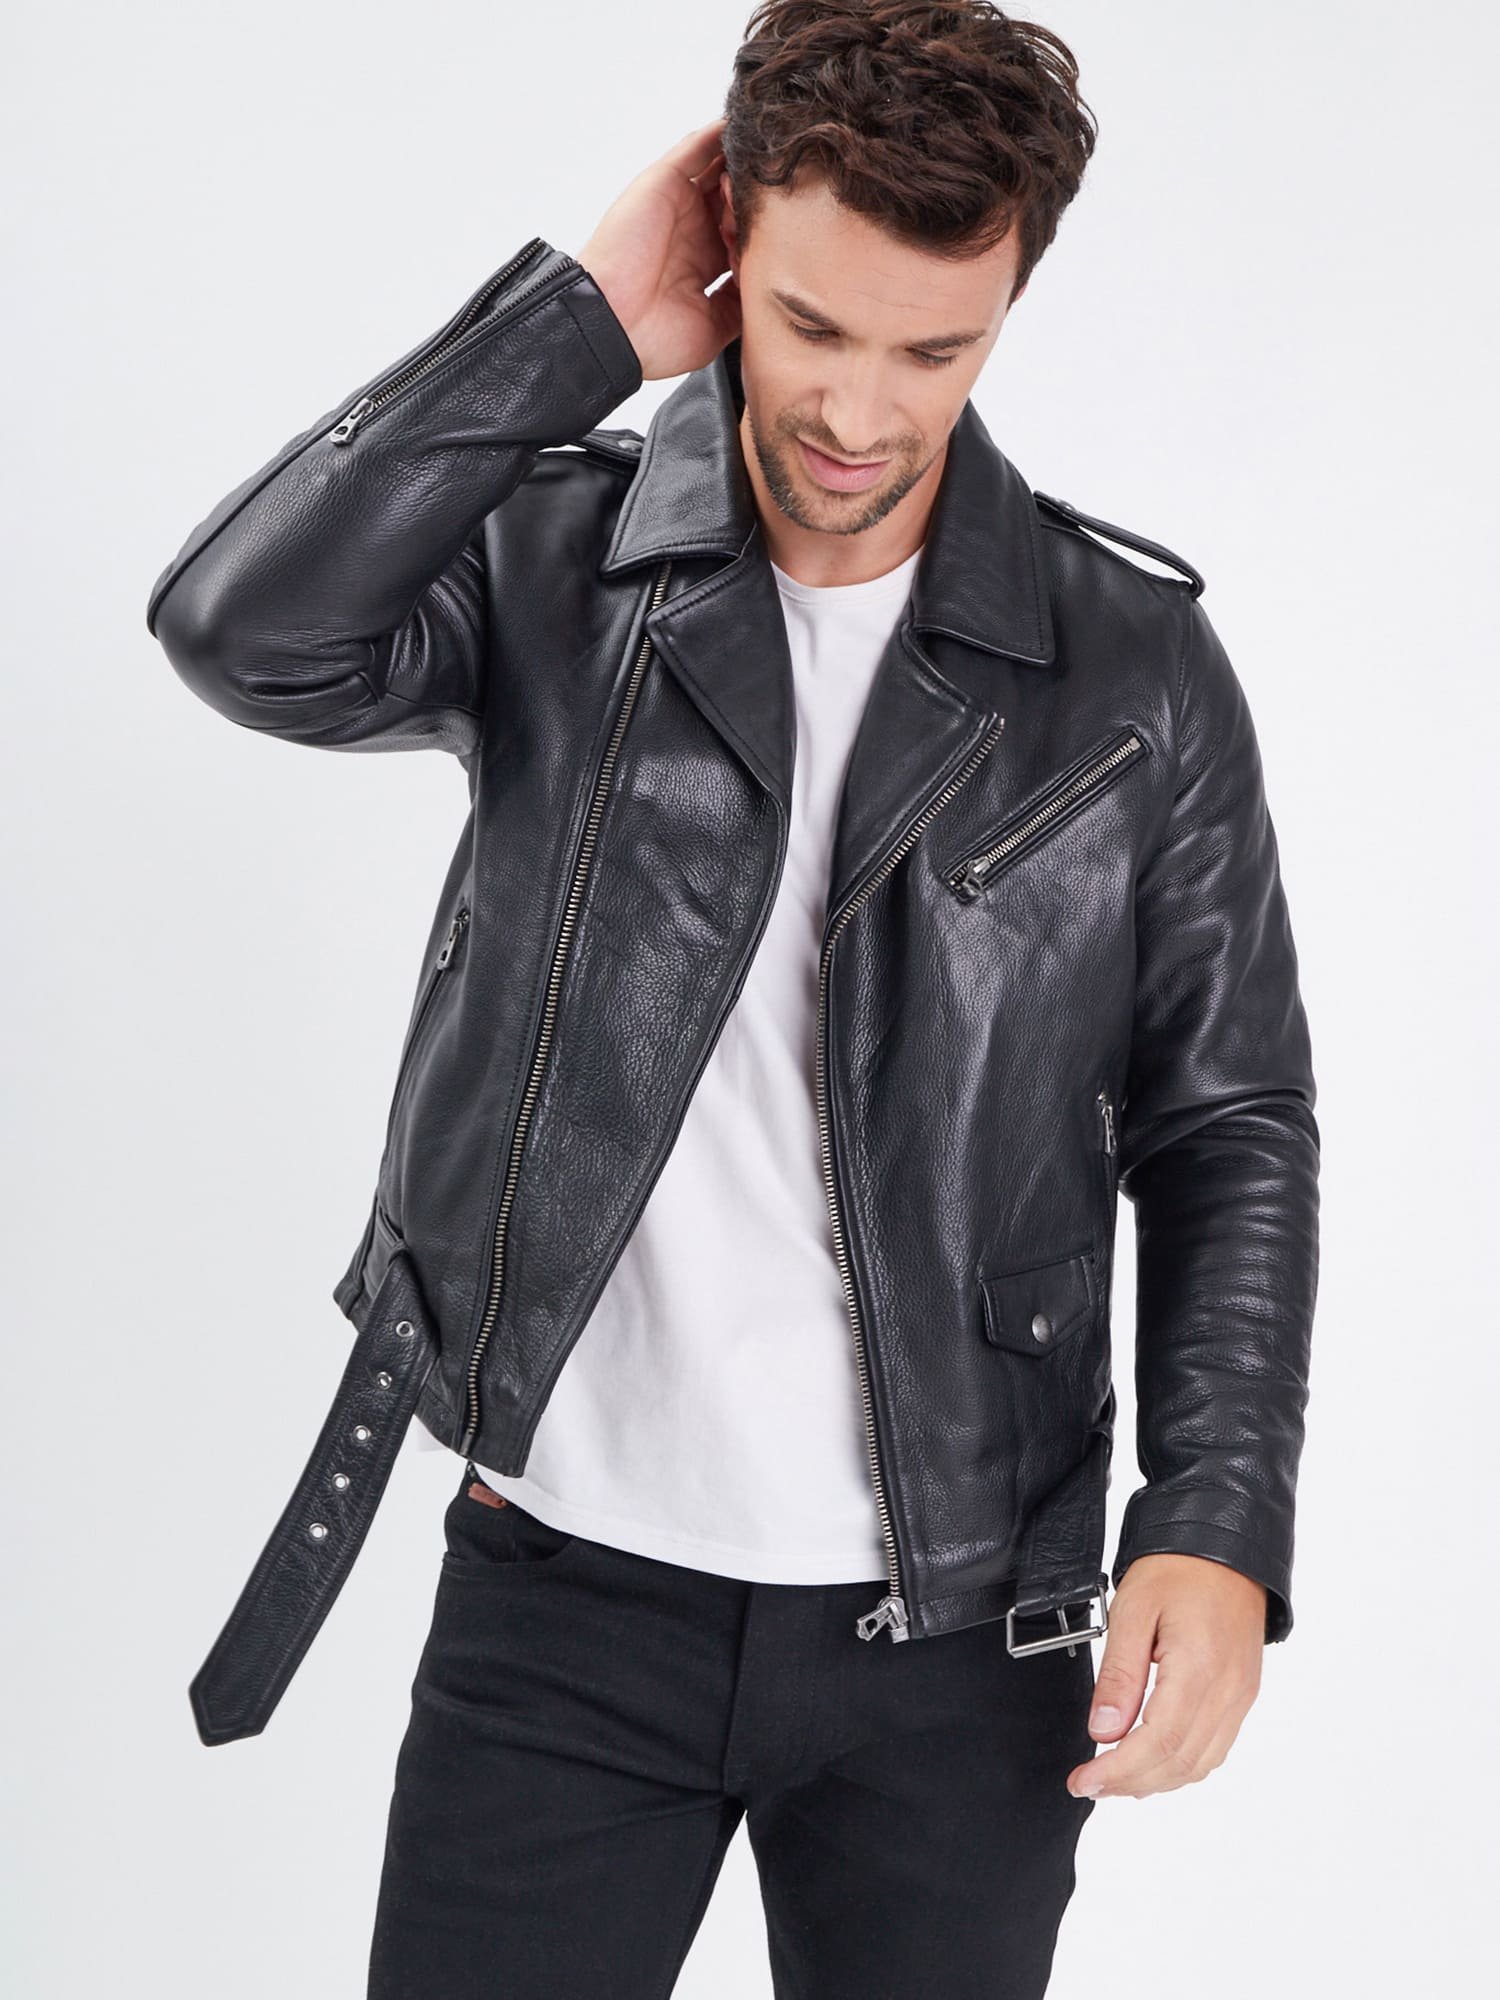 Leather jackets : biker jackets, moto jackets, flight jackets — D73 USA